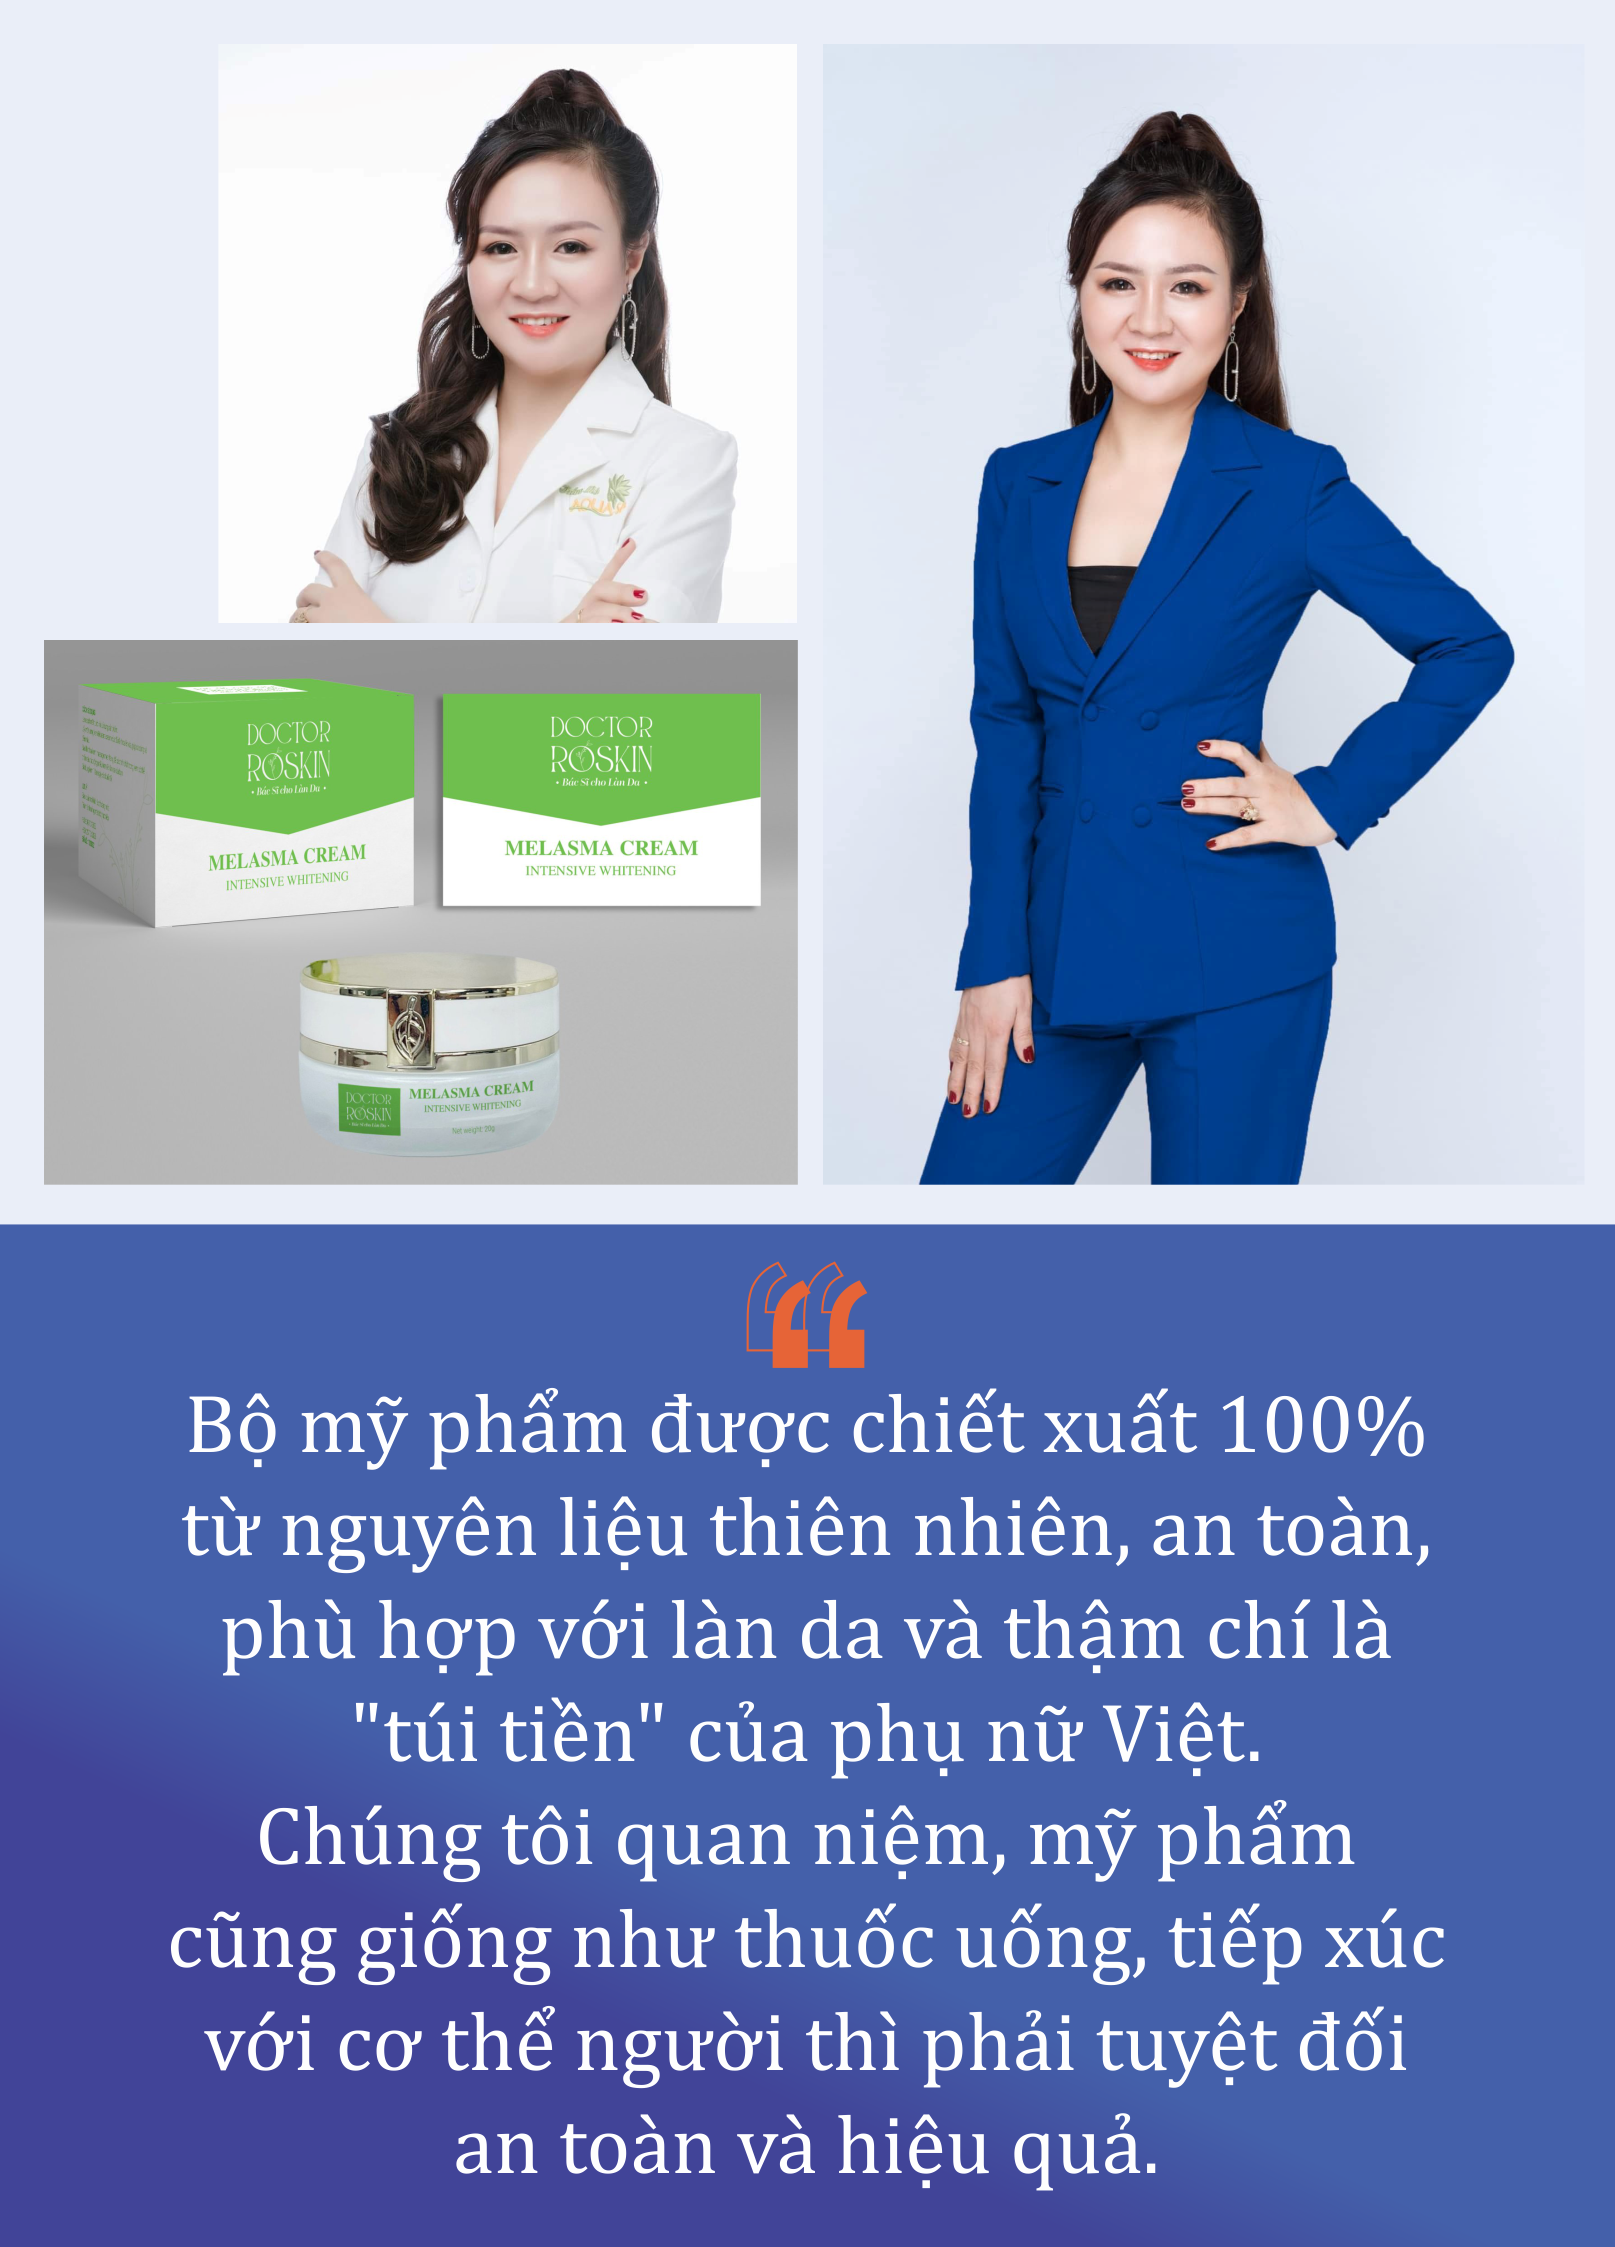 Pharmacist Pham Thi Huyen Trang and Doctor Roskin